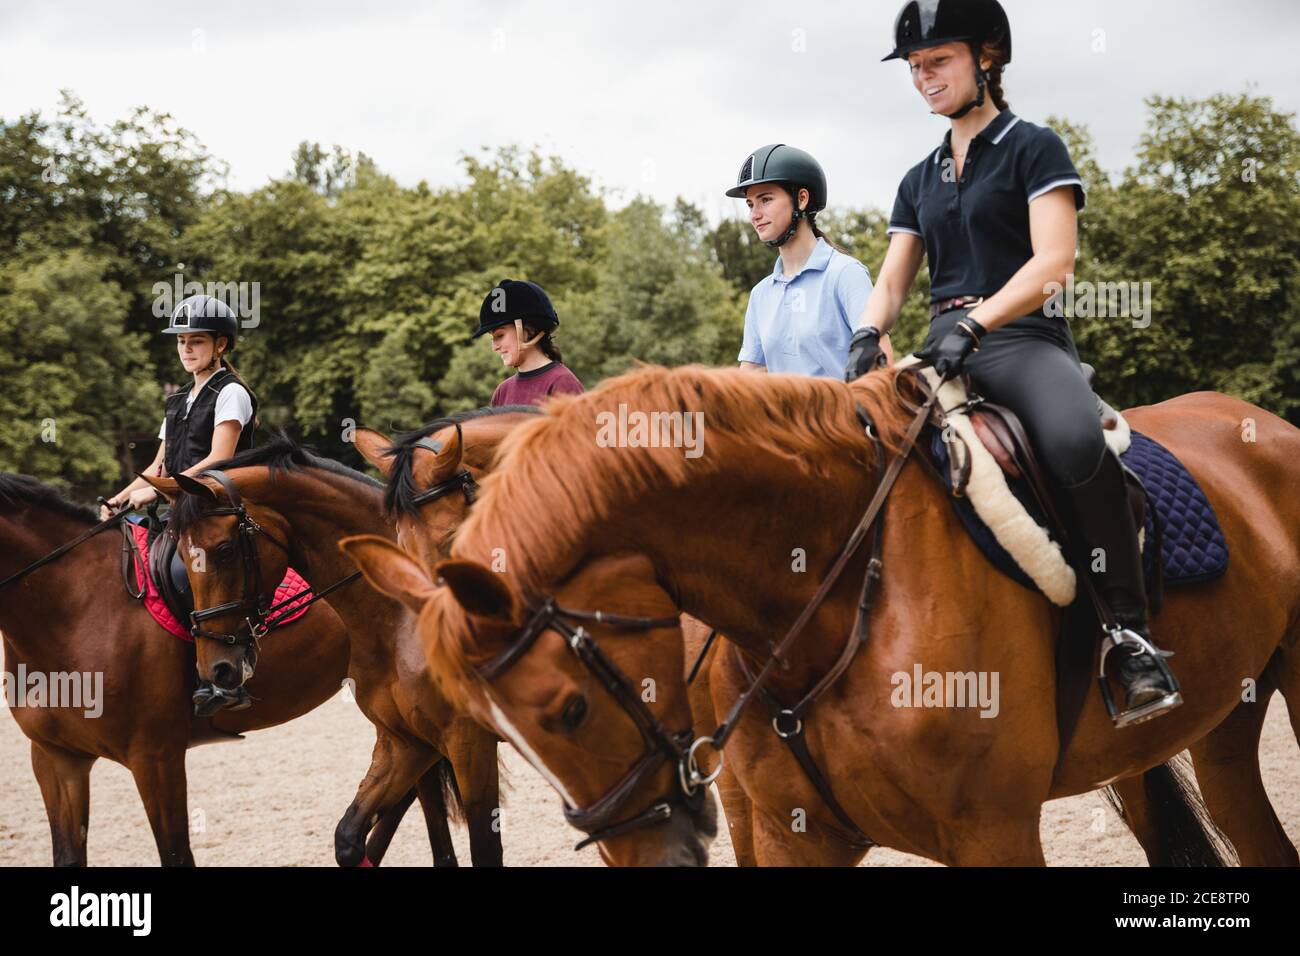 Company of female jockeys in uniform in saddles riding chestnut horses on sandy arena Stock Photo